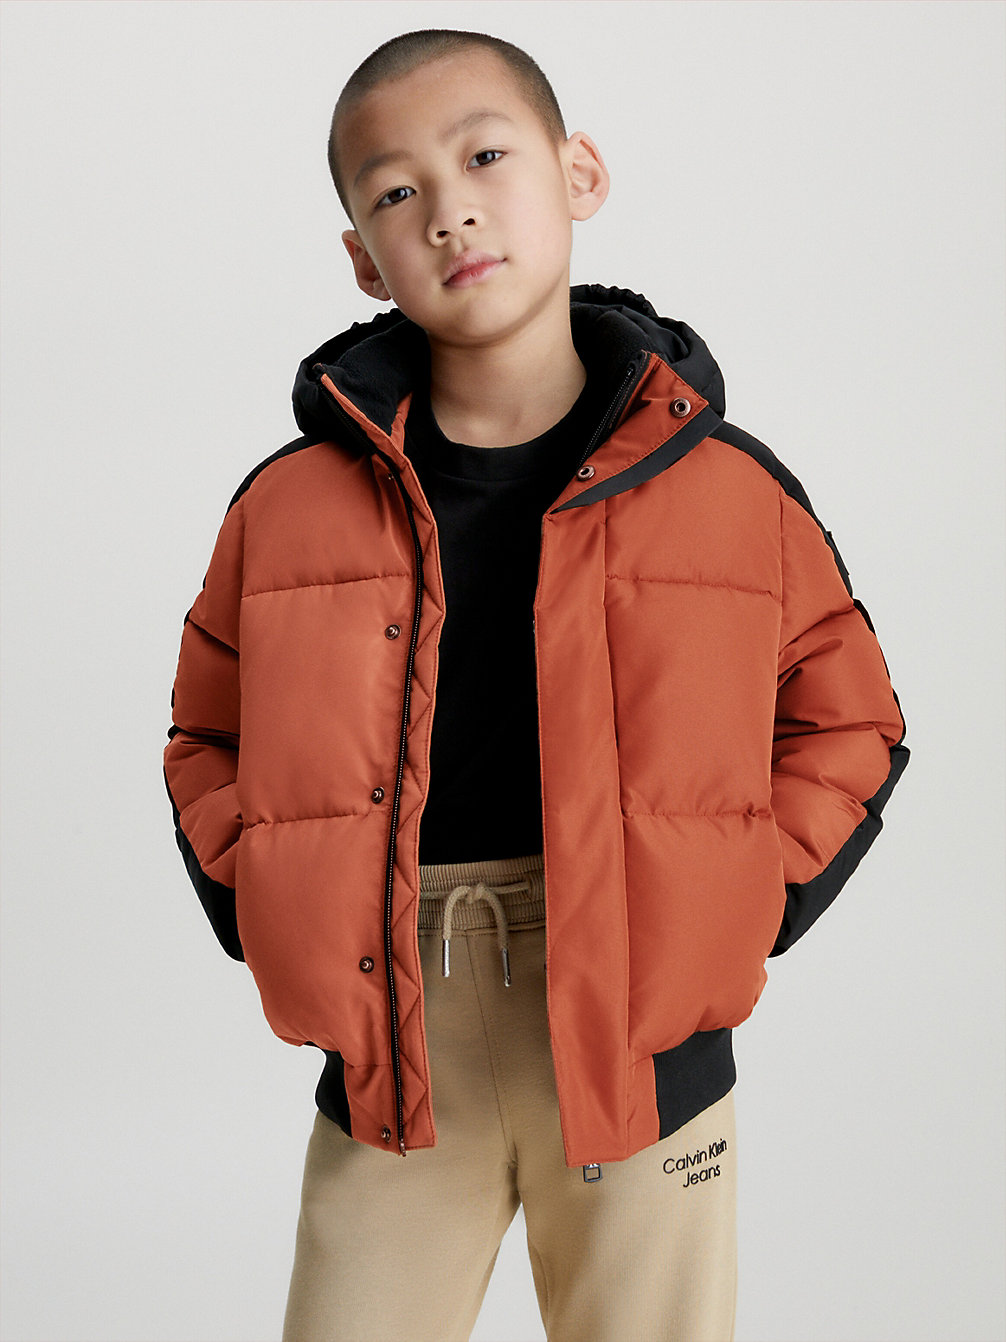 AUBURN / BLACK Colourblock Puffer Jacket undefined boys Calvin Klein